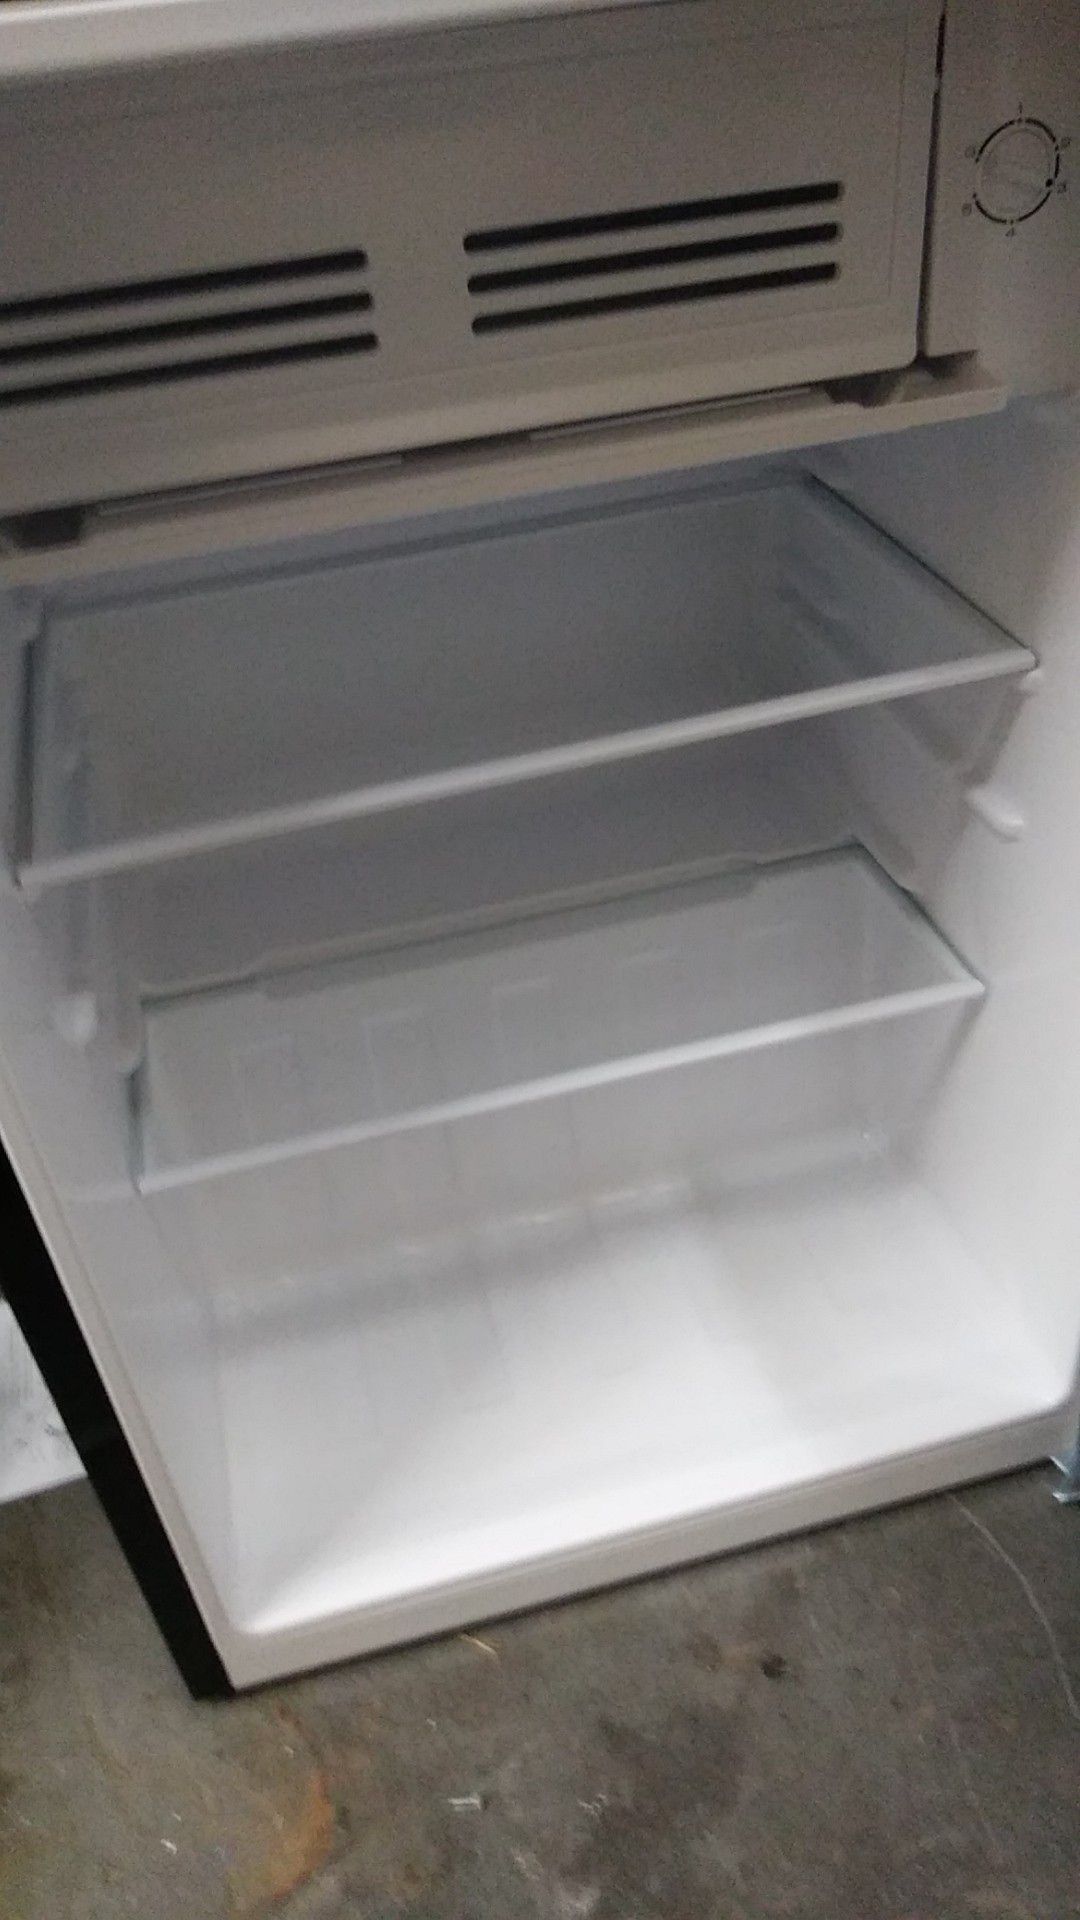 BRAND NEW mini fridge